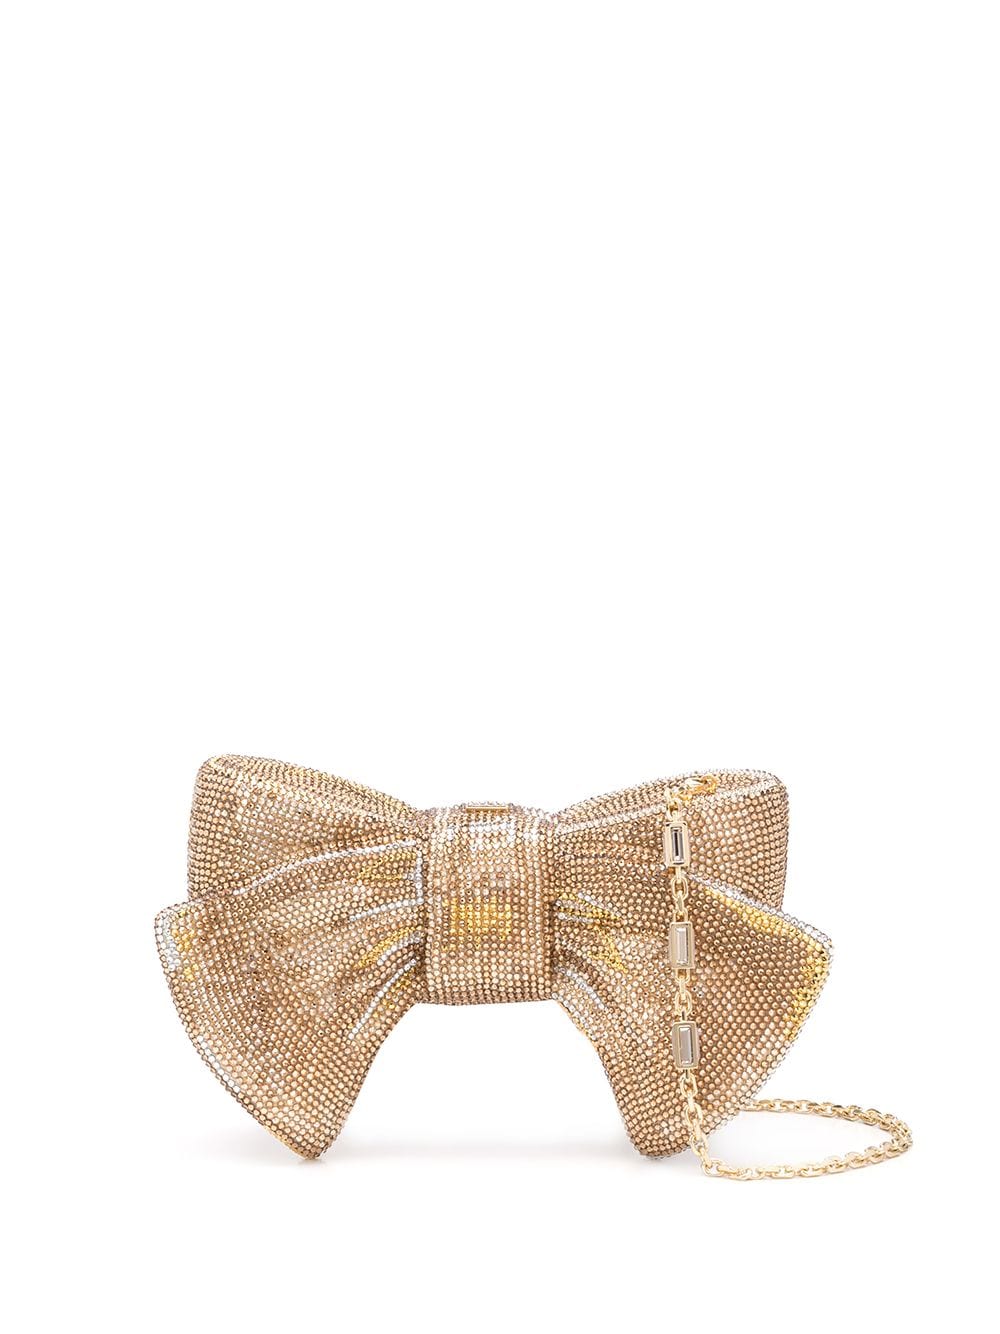 Judith Leiber Bow Embellished Clutch Bag In Gold